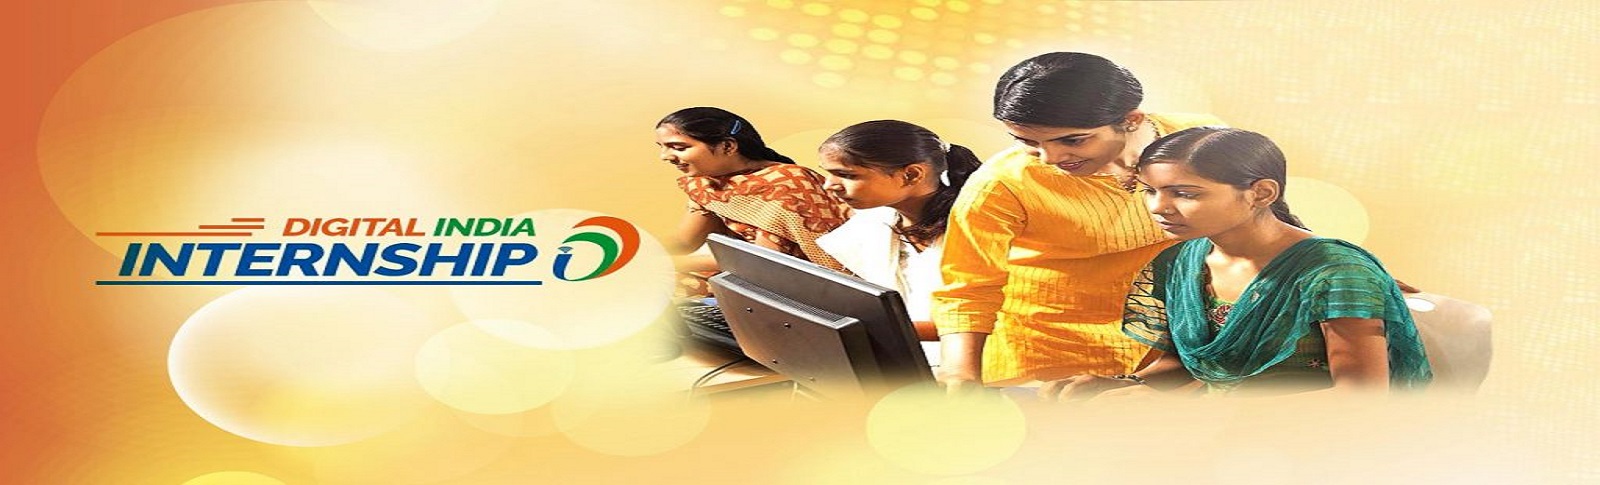 Digital India Intership Program